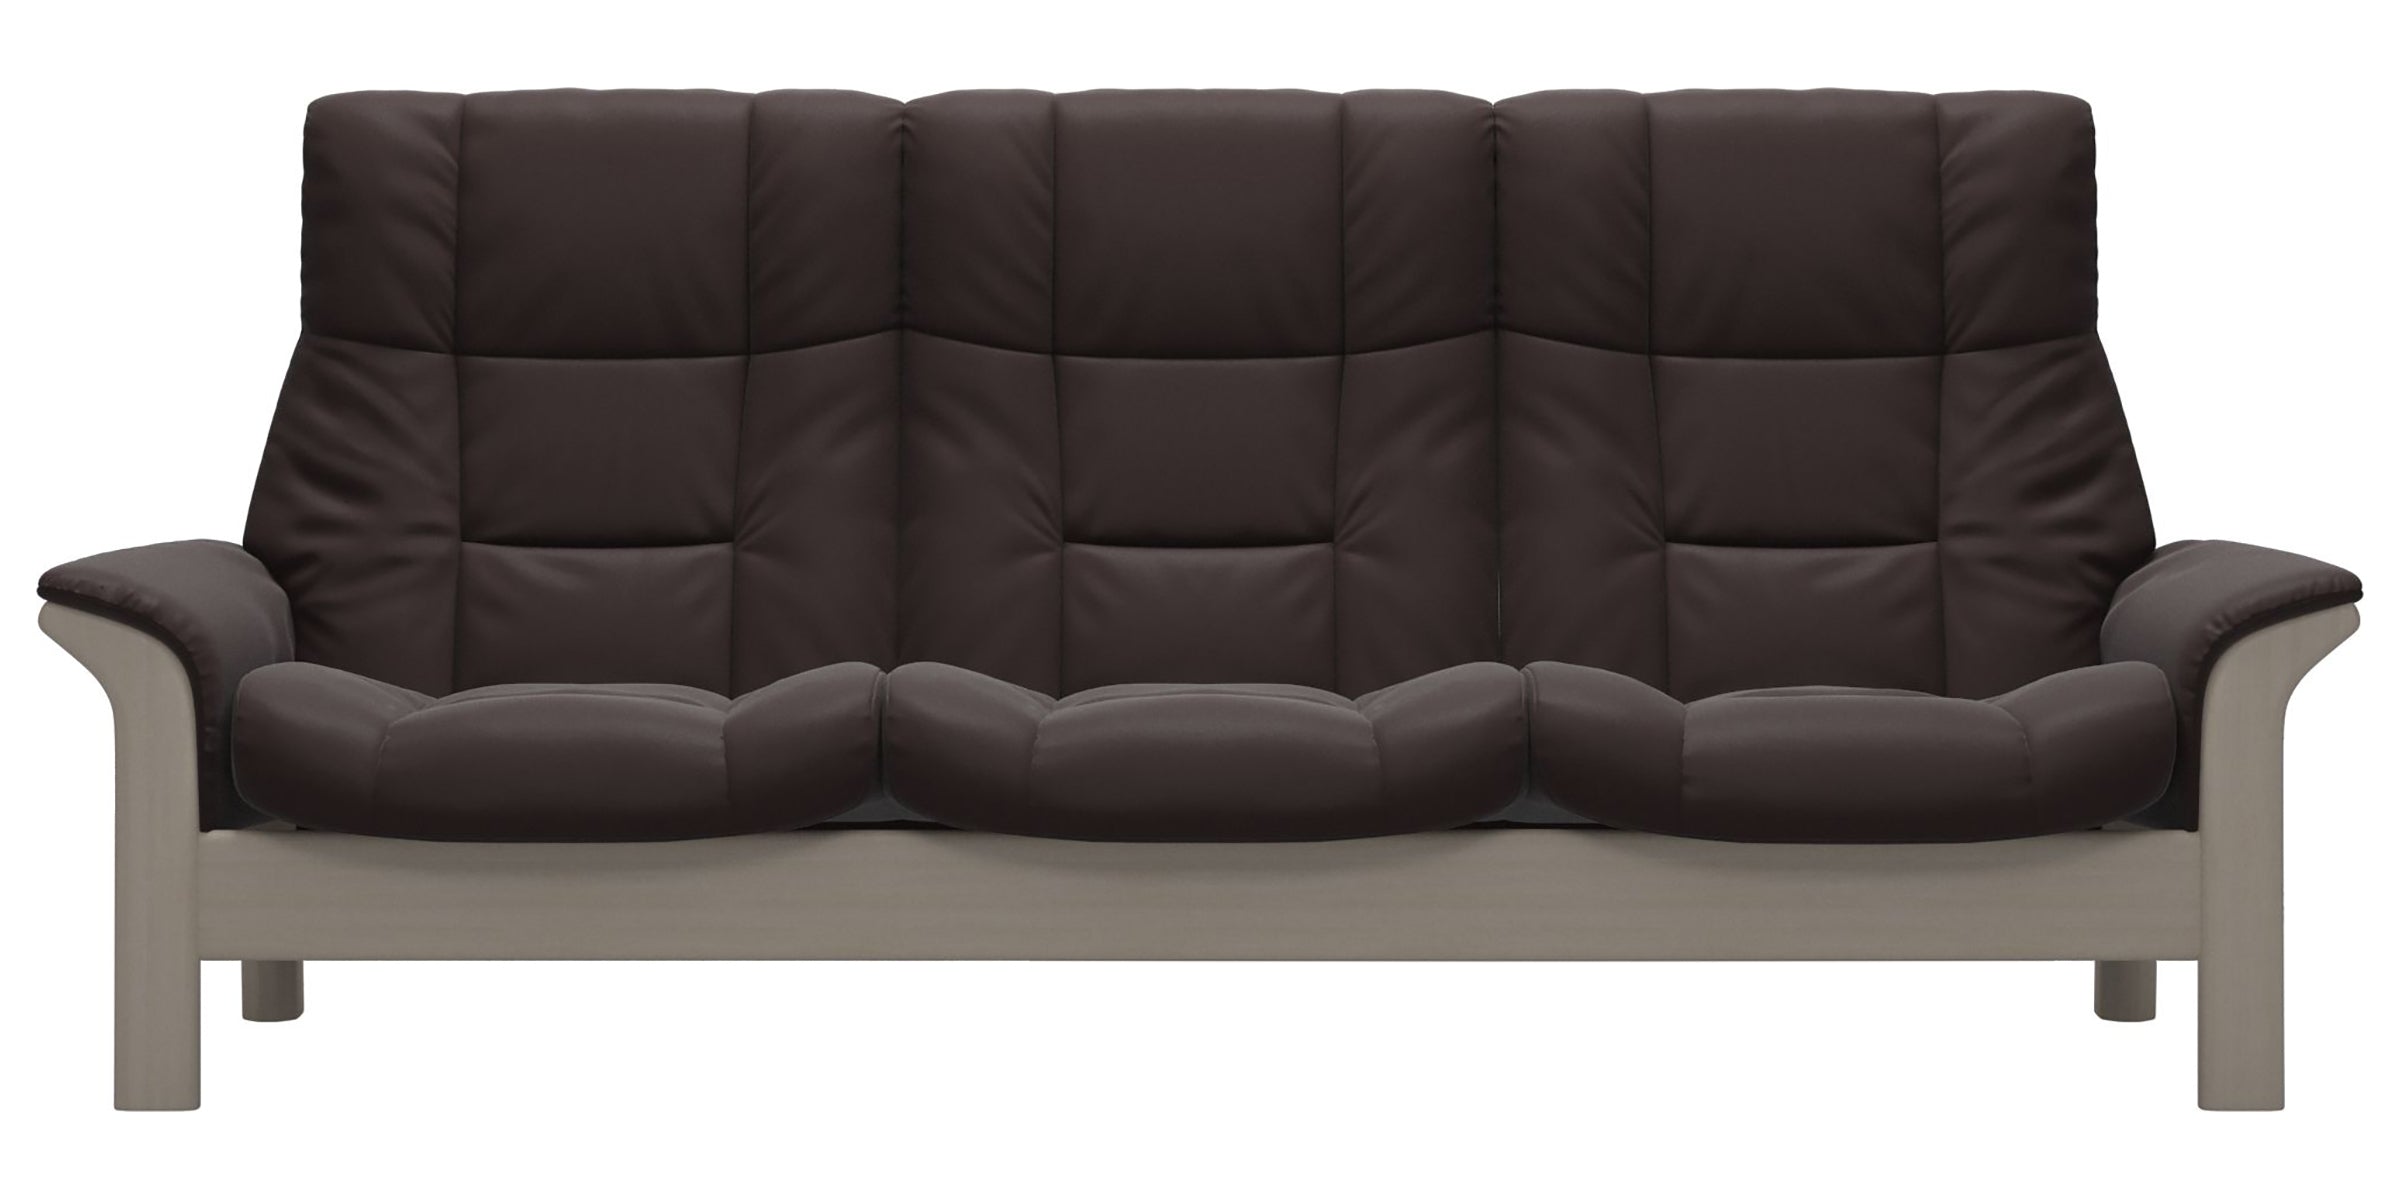 Paloma Leather Chocolate and Whitewash Base | Stressless Buckingham 3-Seater High Back Sofa | Valley Ridge Furniture